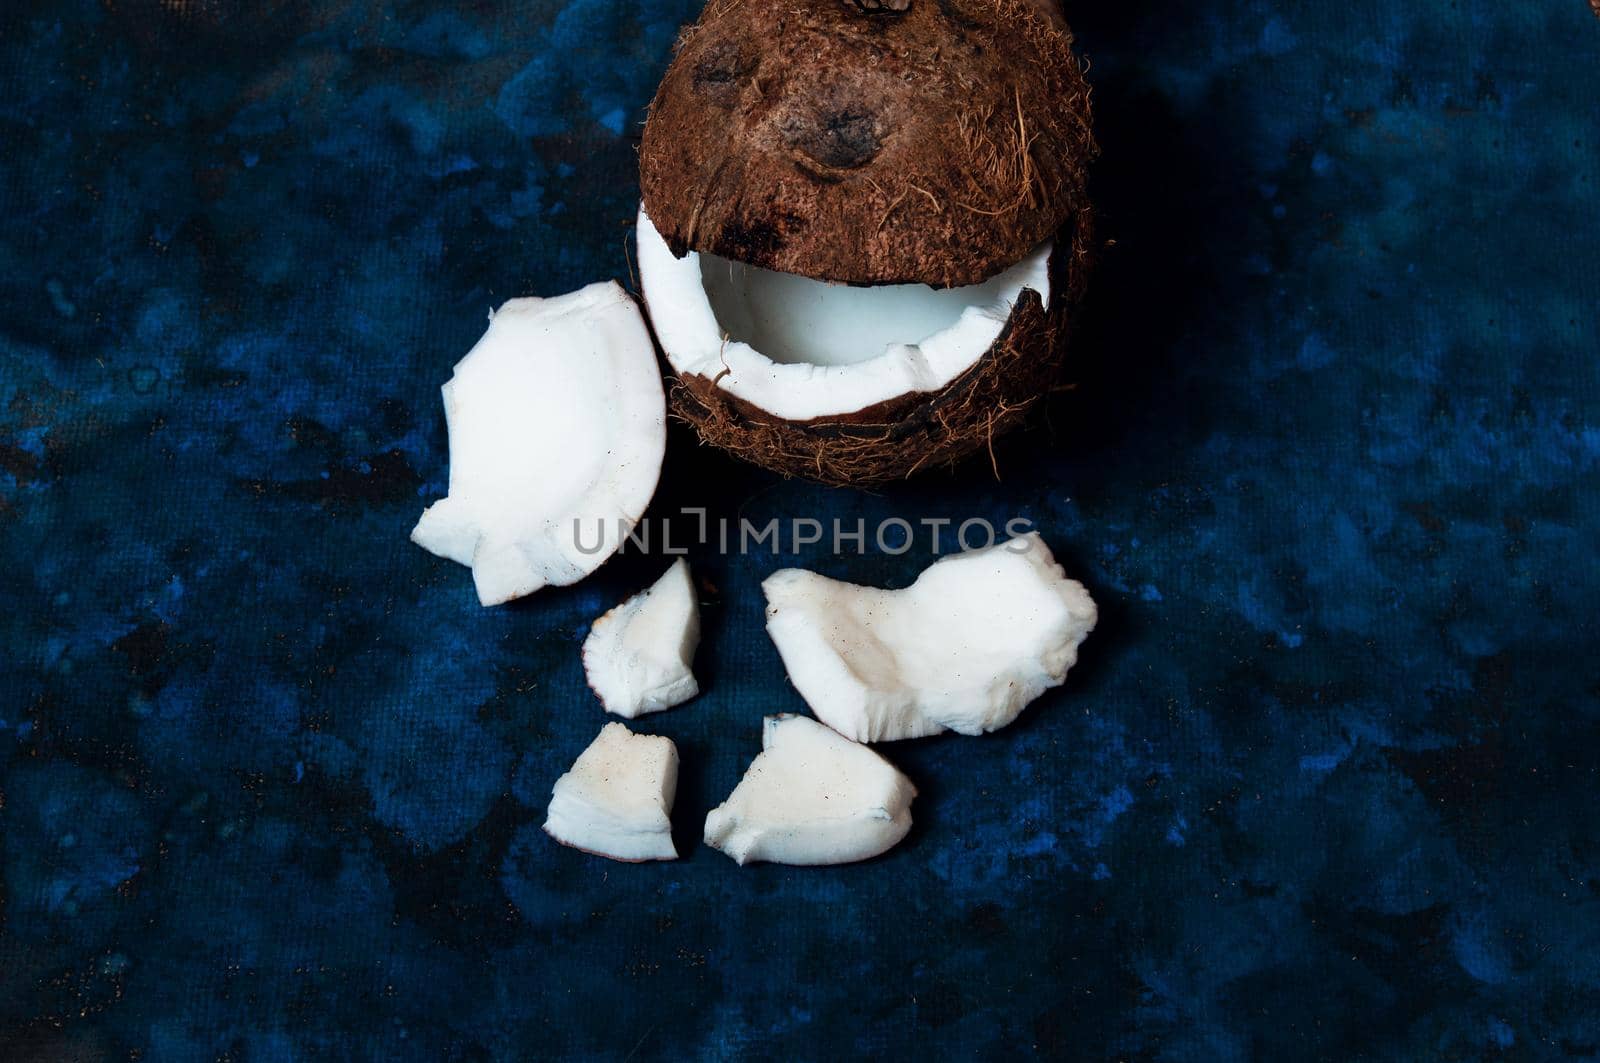 Open coconut lies on a dark blue background next to broken pieces lying randomly